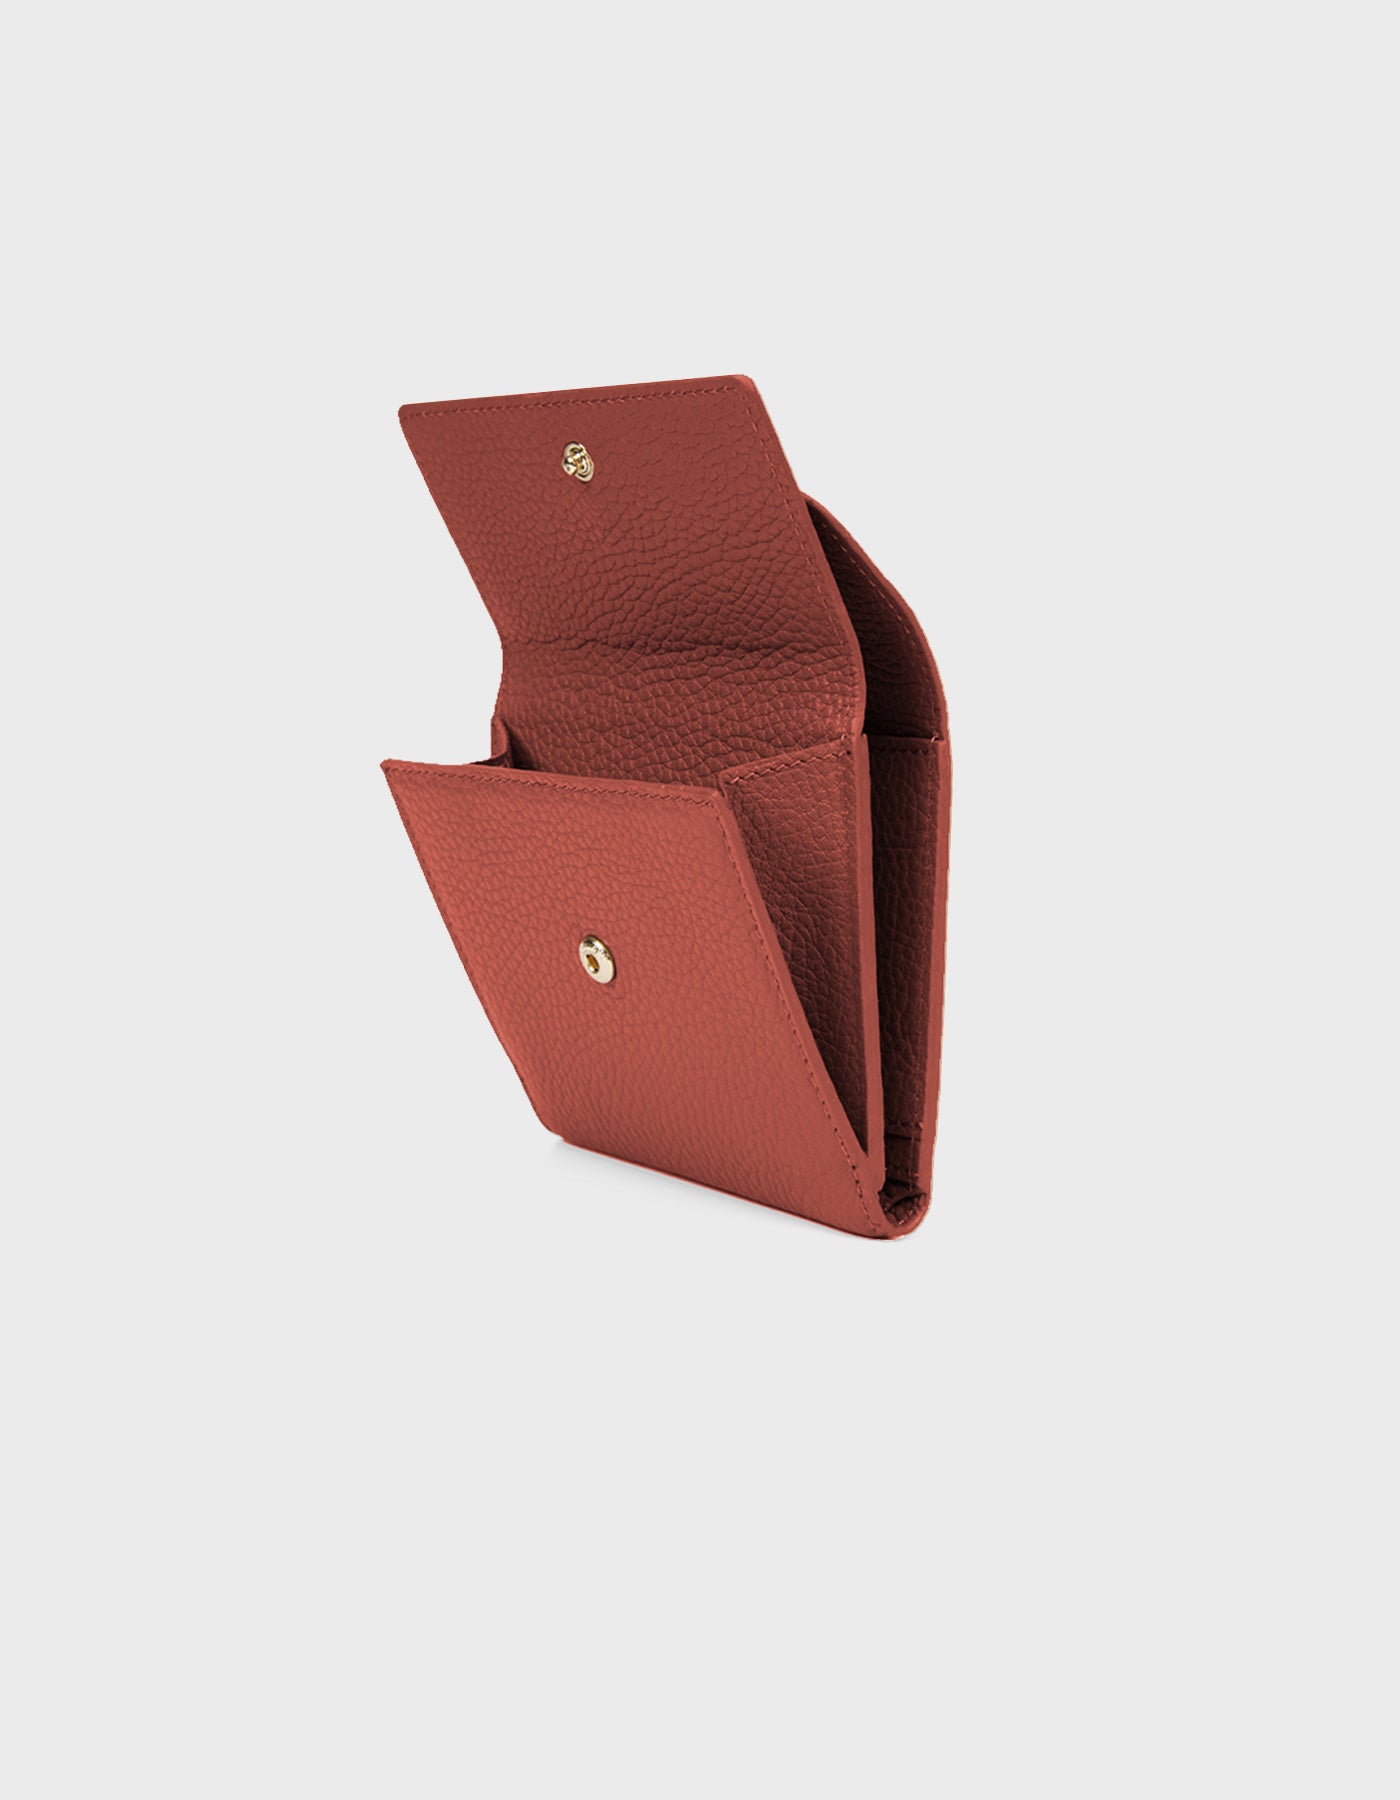 HiVa Atelier - Larus Compact Wallet Ginger